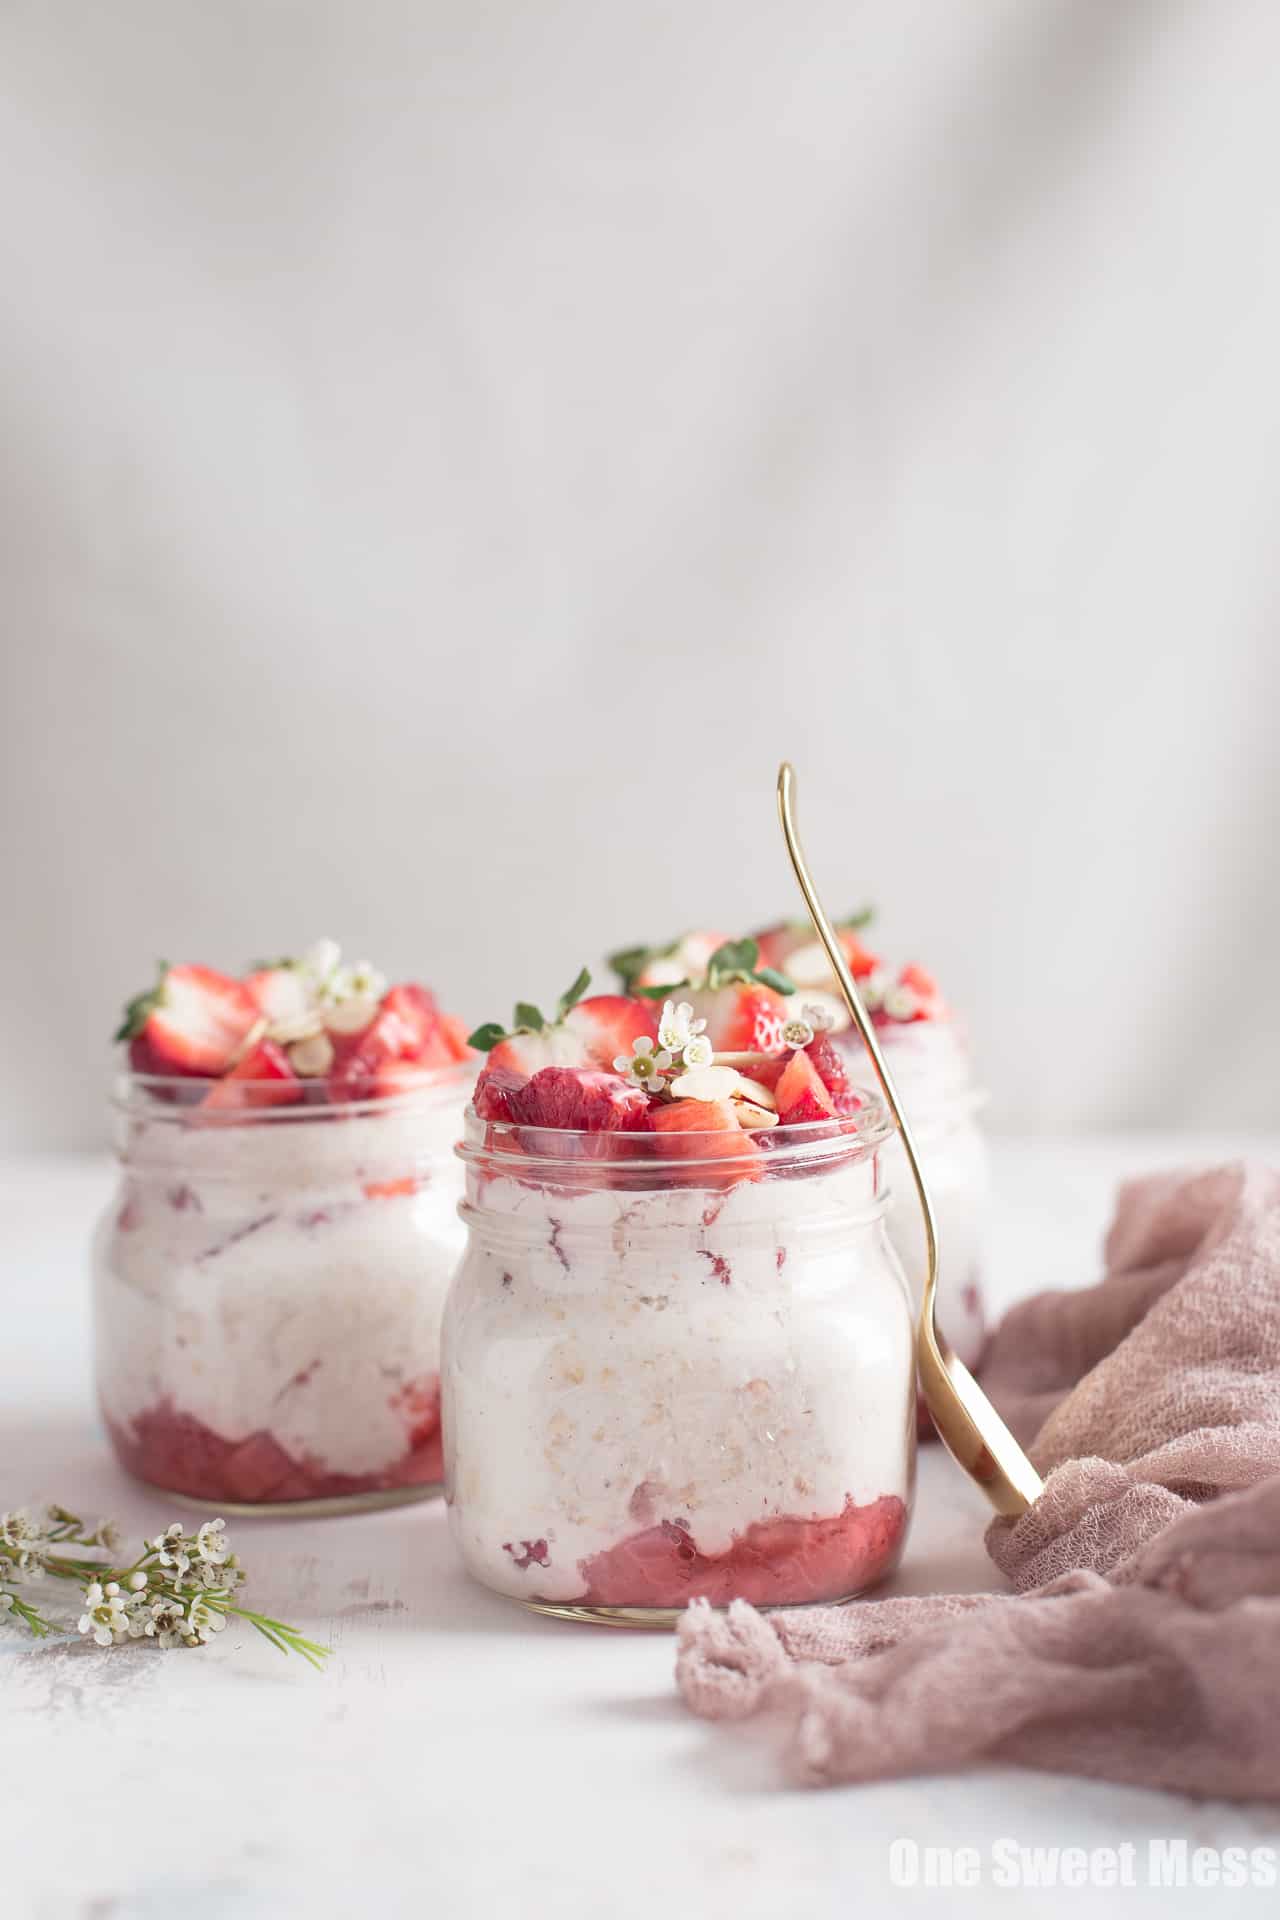 Strawberries and Cream Overnight Oatmeal {Gluten-Free + Vegan Option) 